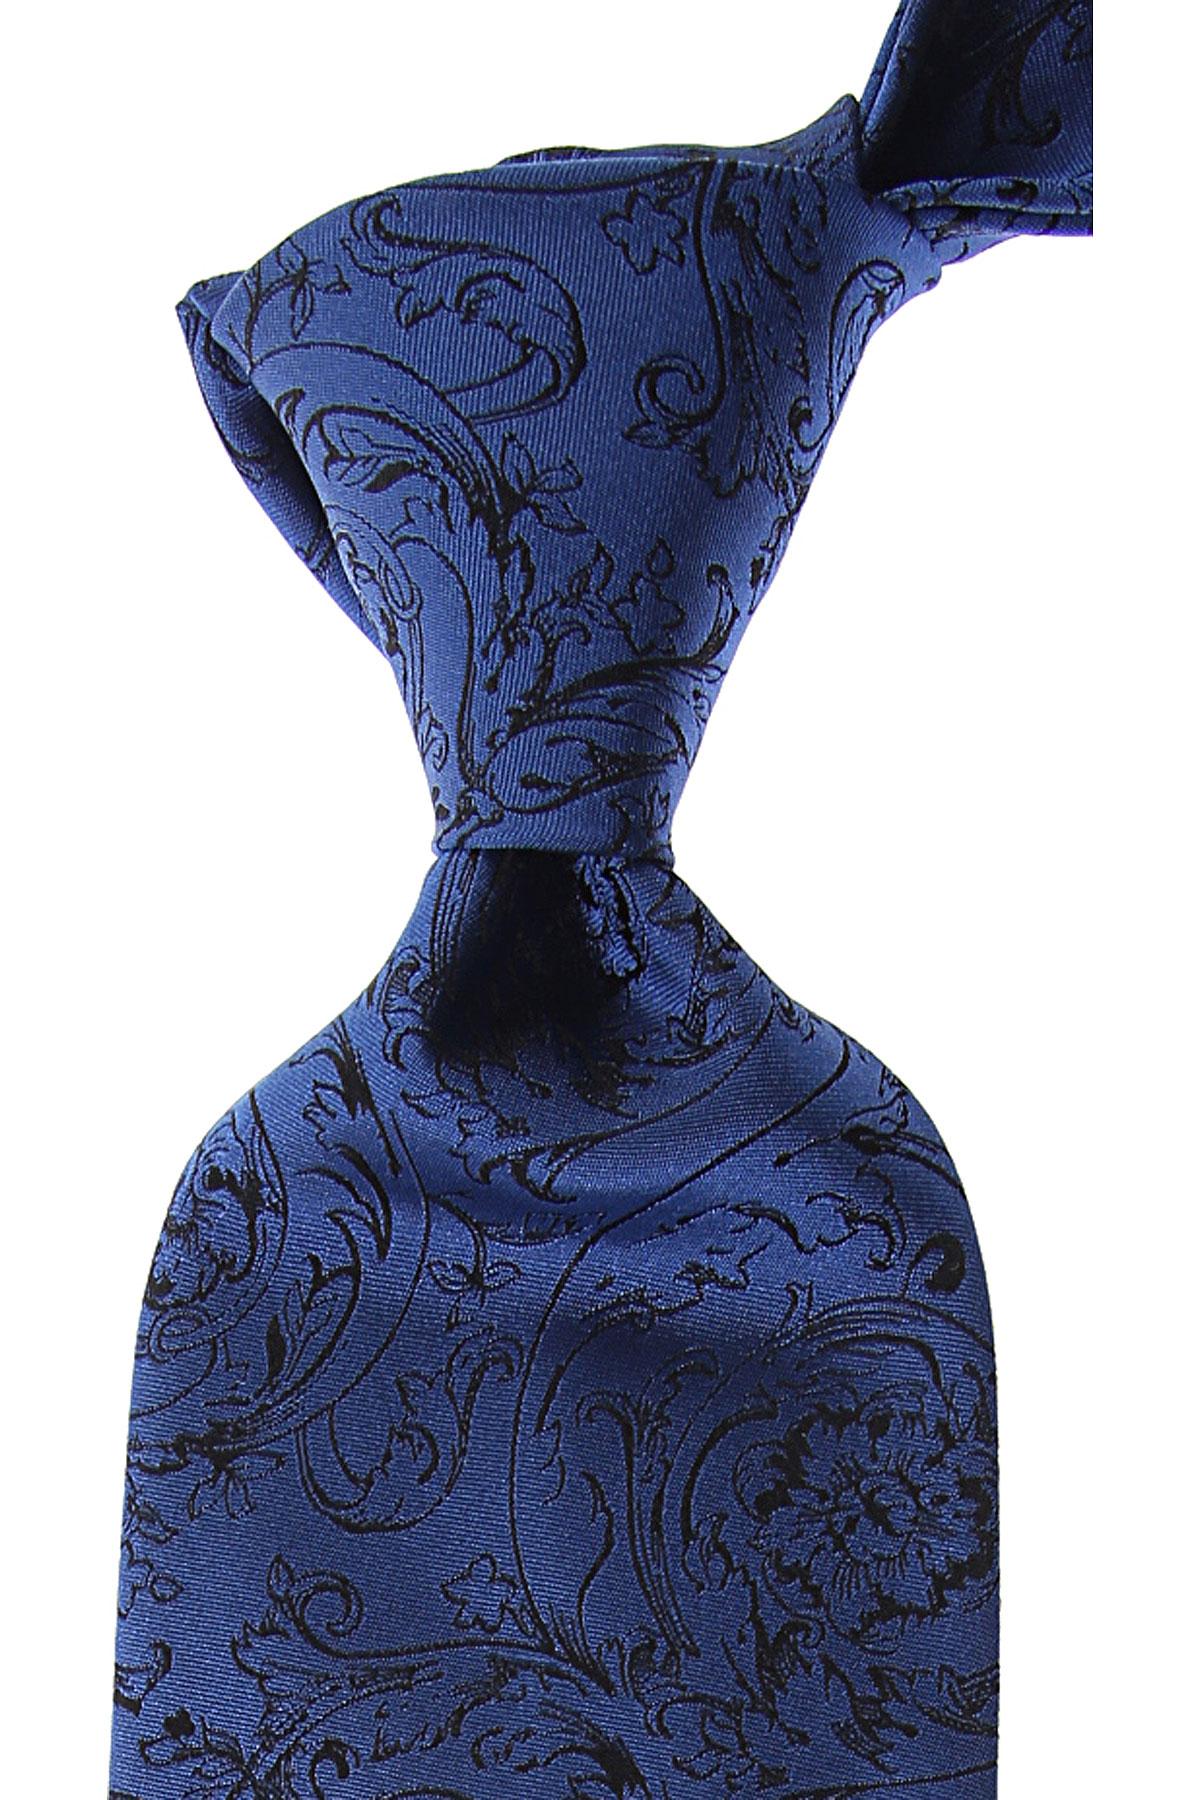 Versace Silk Ties On Sale in Light Cobalt Blue (Blue) for Men - Lyst